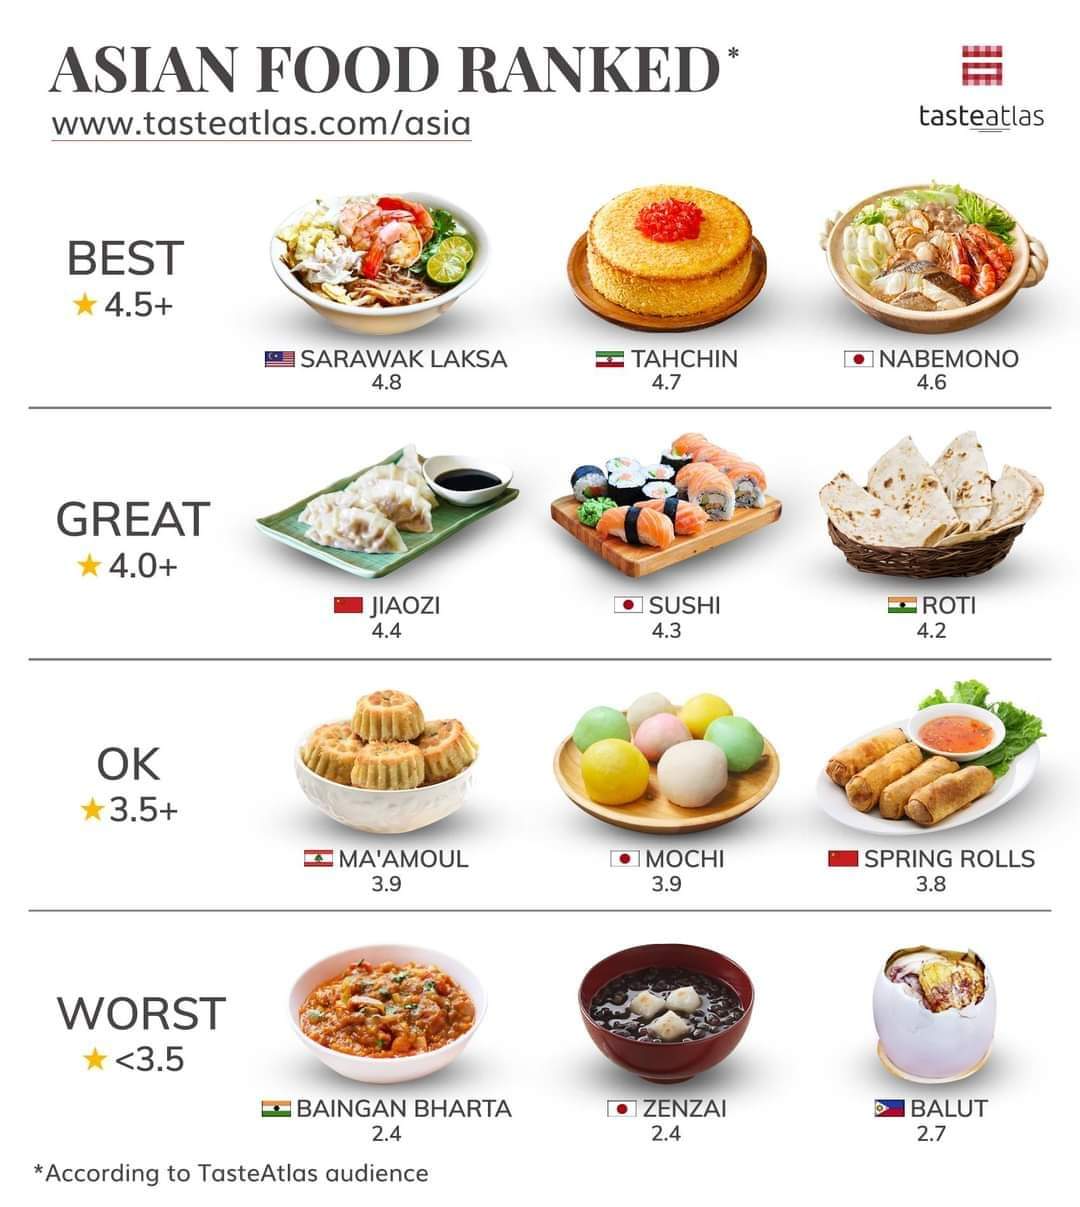 Best Asian Food by TasteAtlas